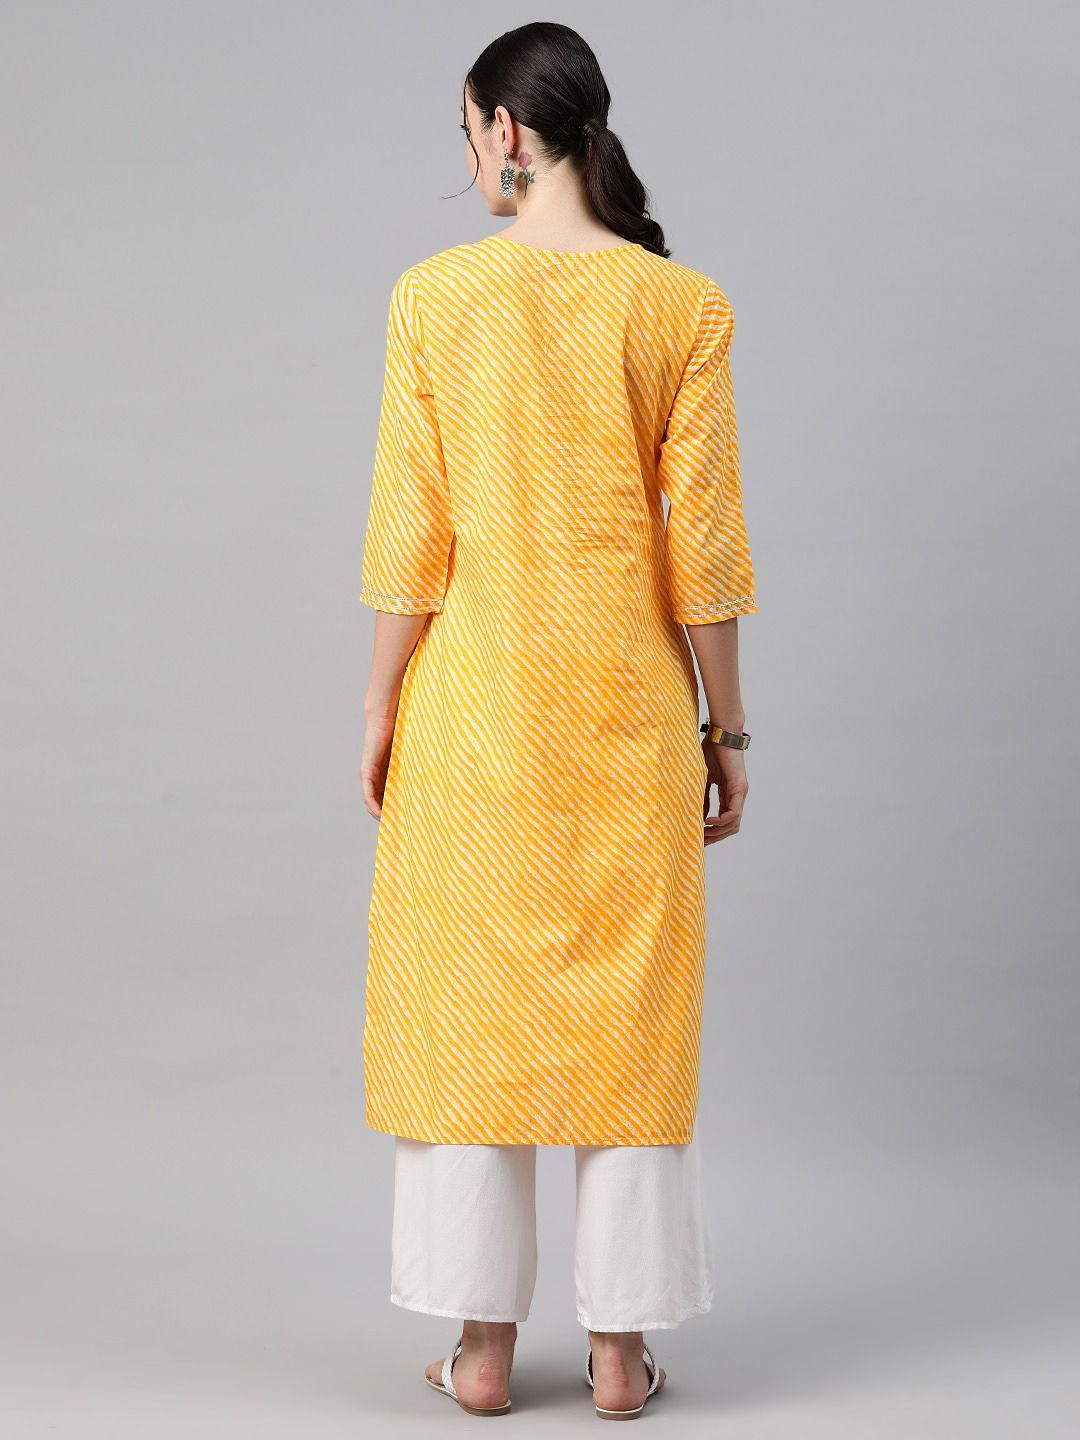 Straight Style Cotton Fabric Yellow Color Kurti